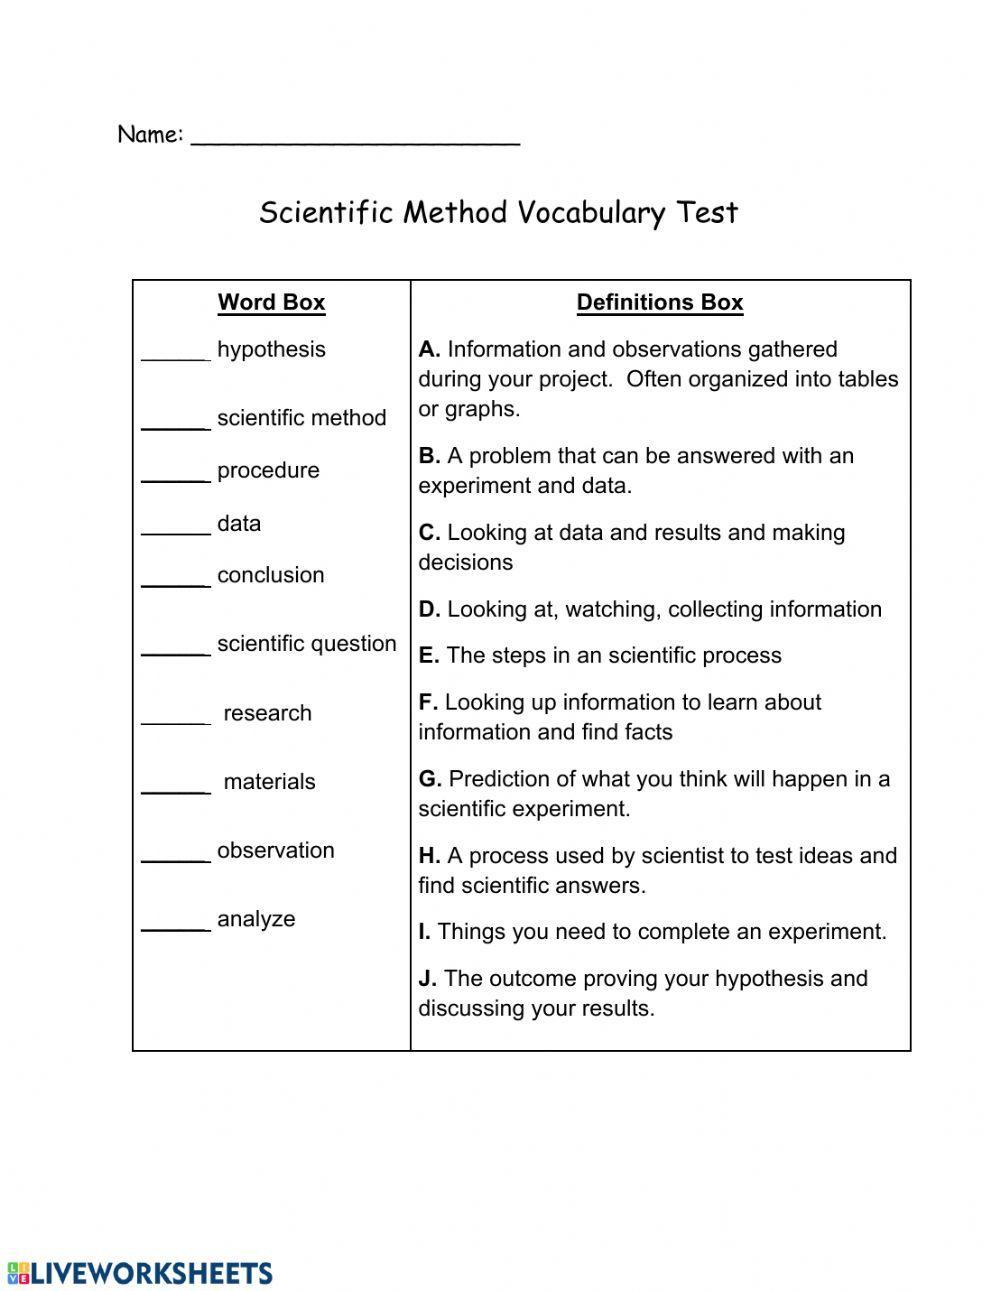 Scientific Process Vocabulary Test